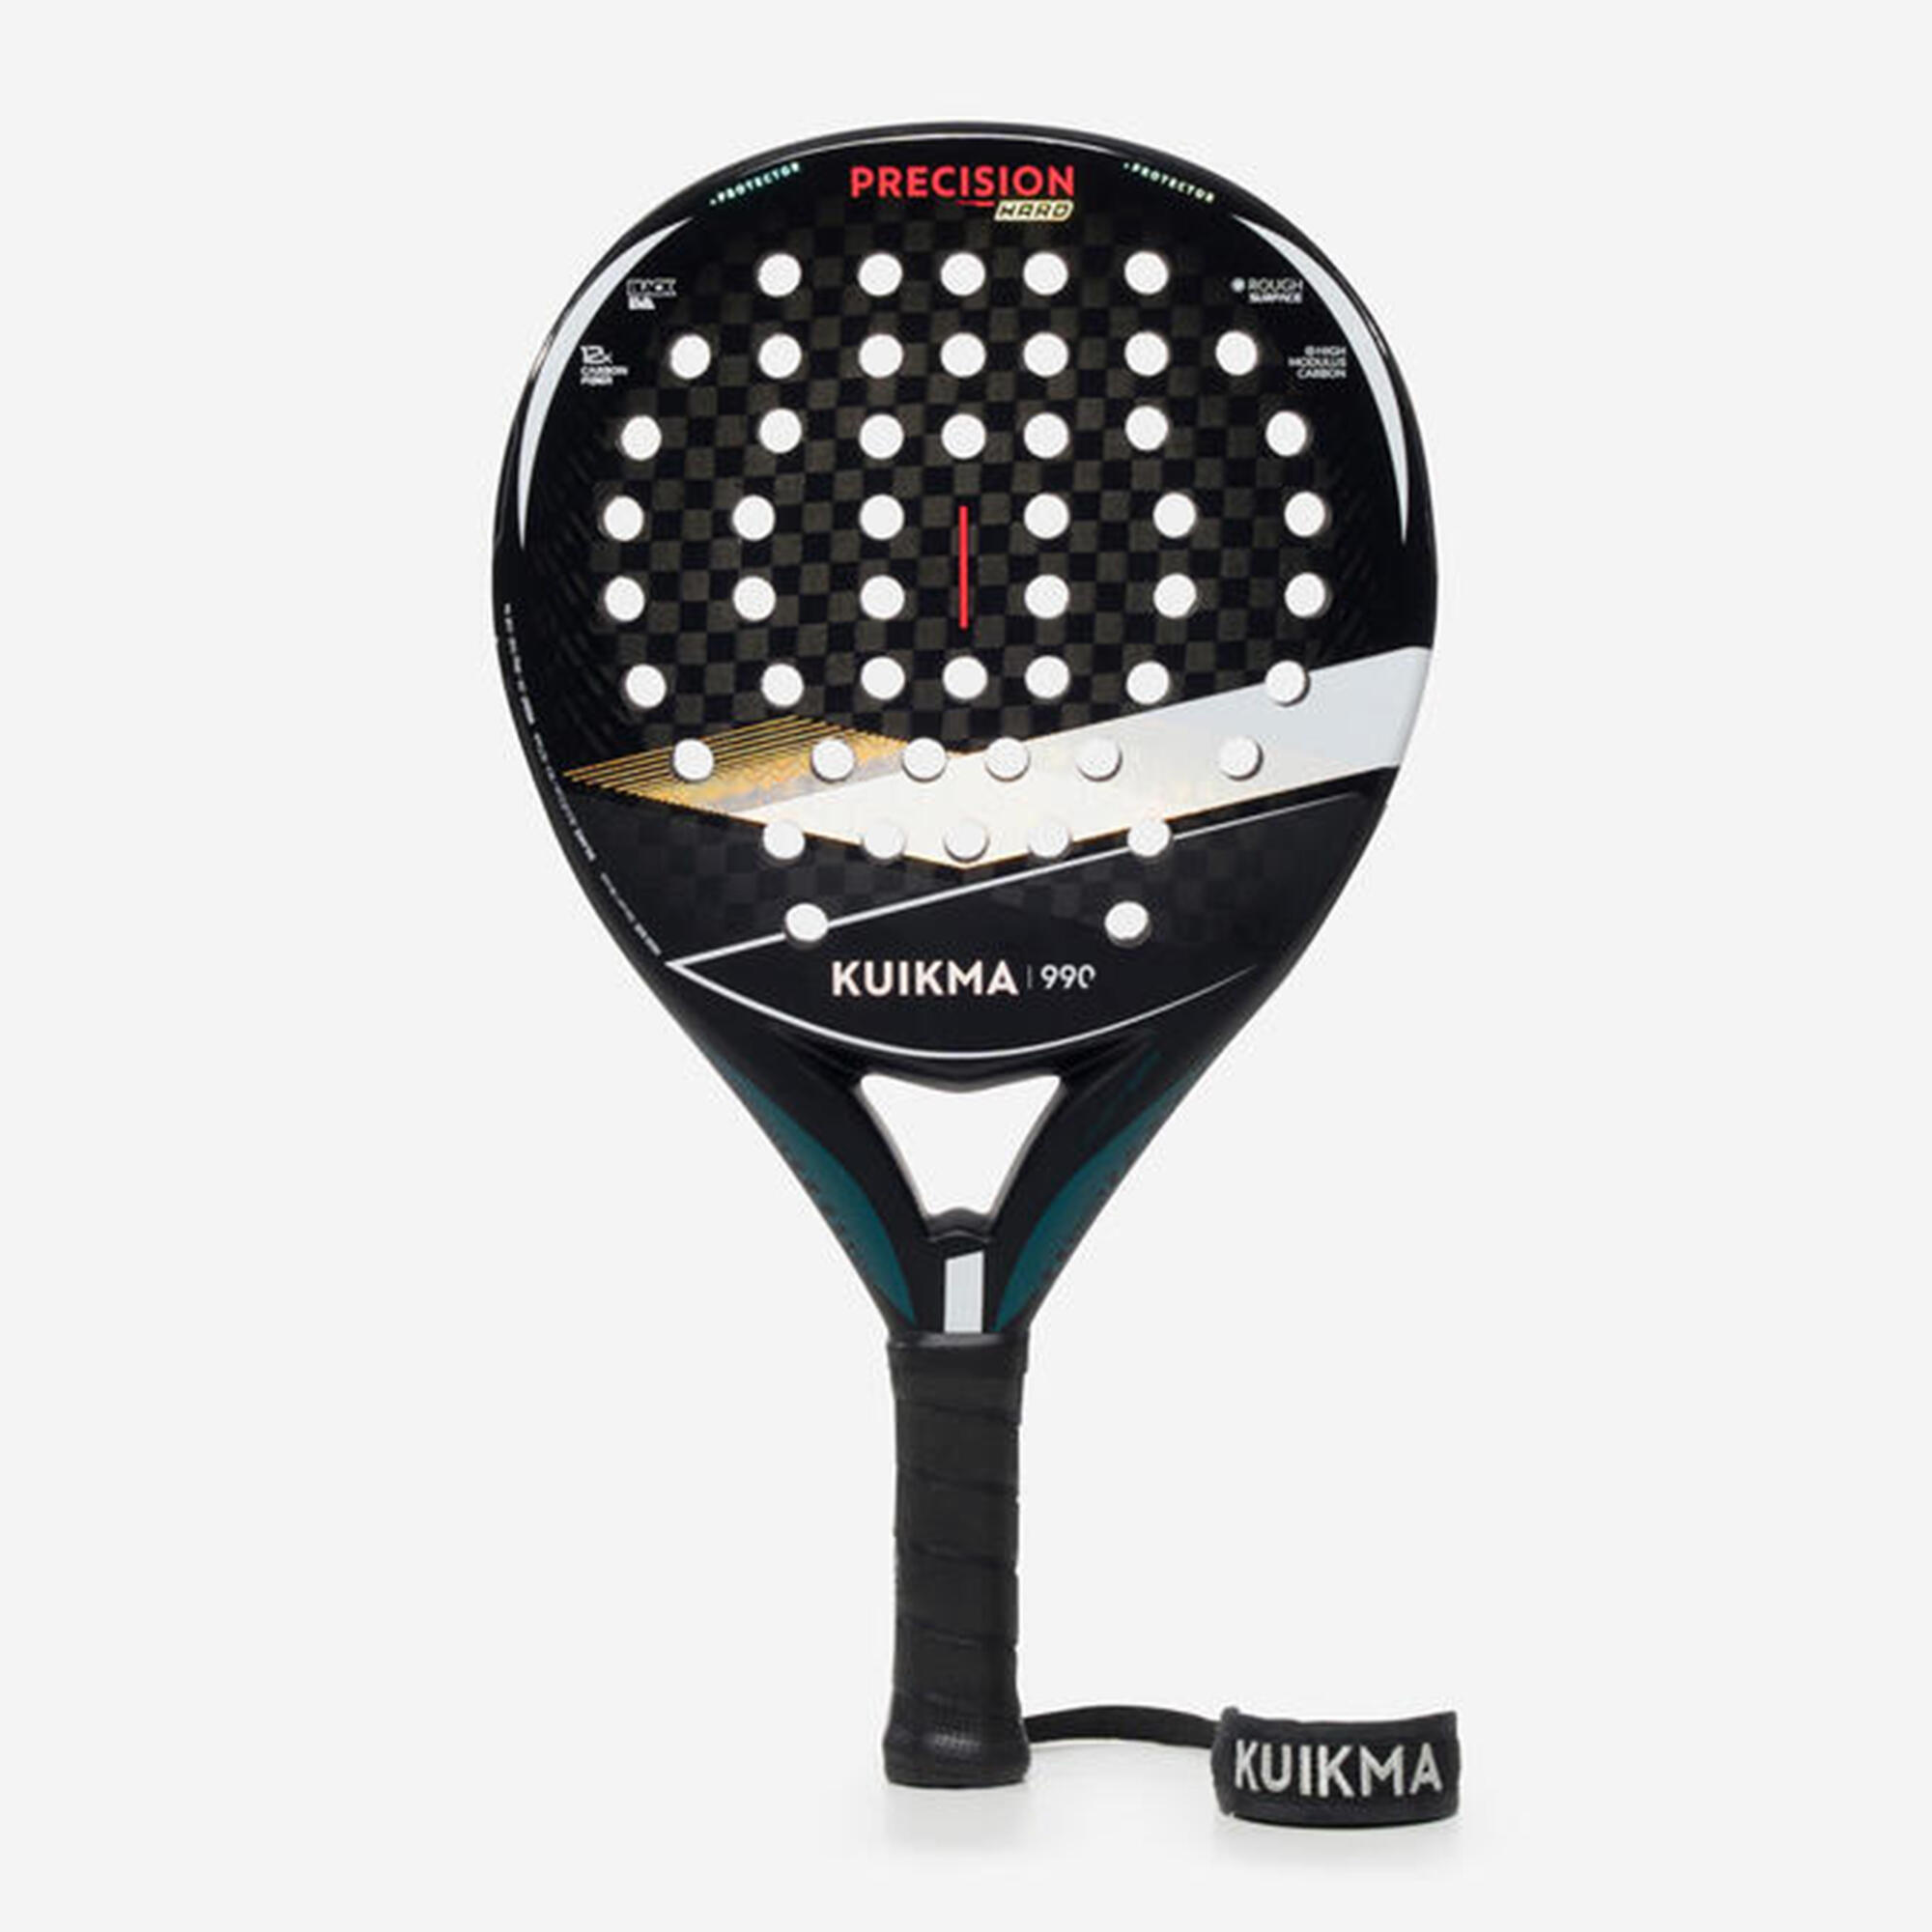 KUIKMA Adult Padel Racket PR 990 Precision Hard